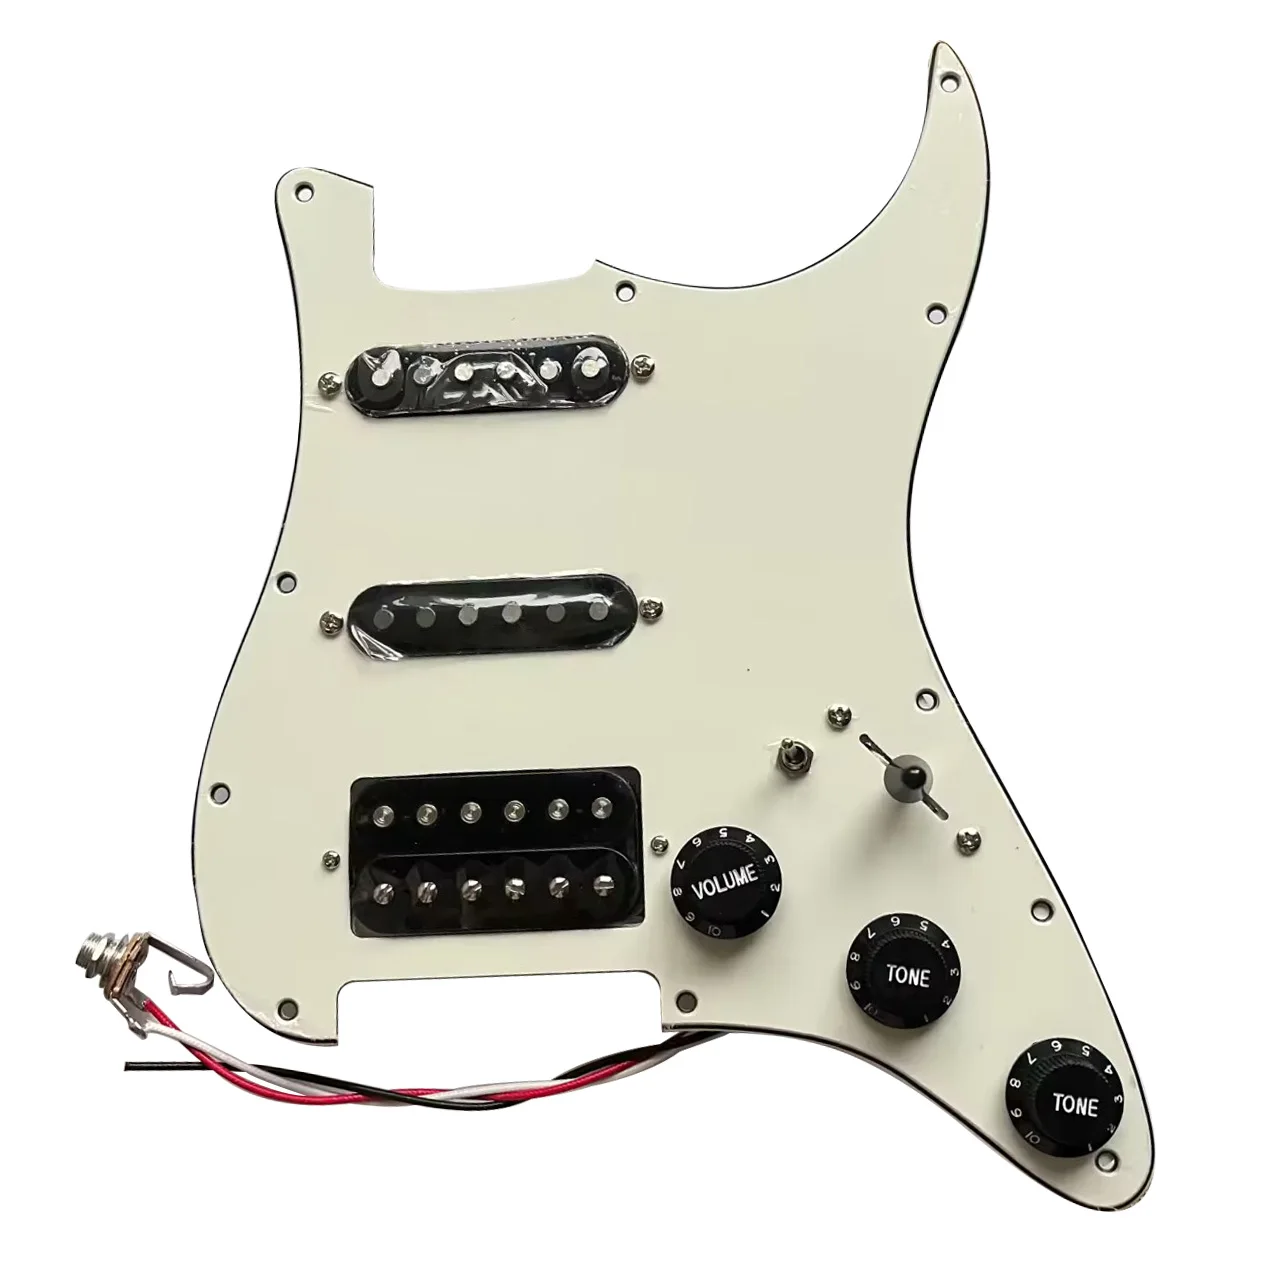 

Upgrade SSH Prewired Pickguard set Loaded SSL1 Alnico V Humbucker Pickup Coil Split, Multi Switch for Electric Guitar